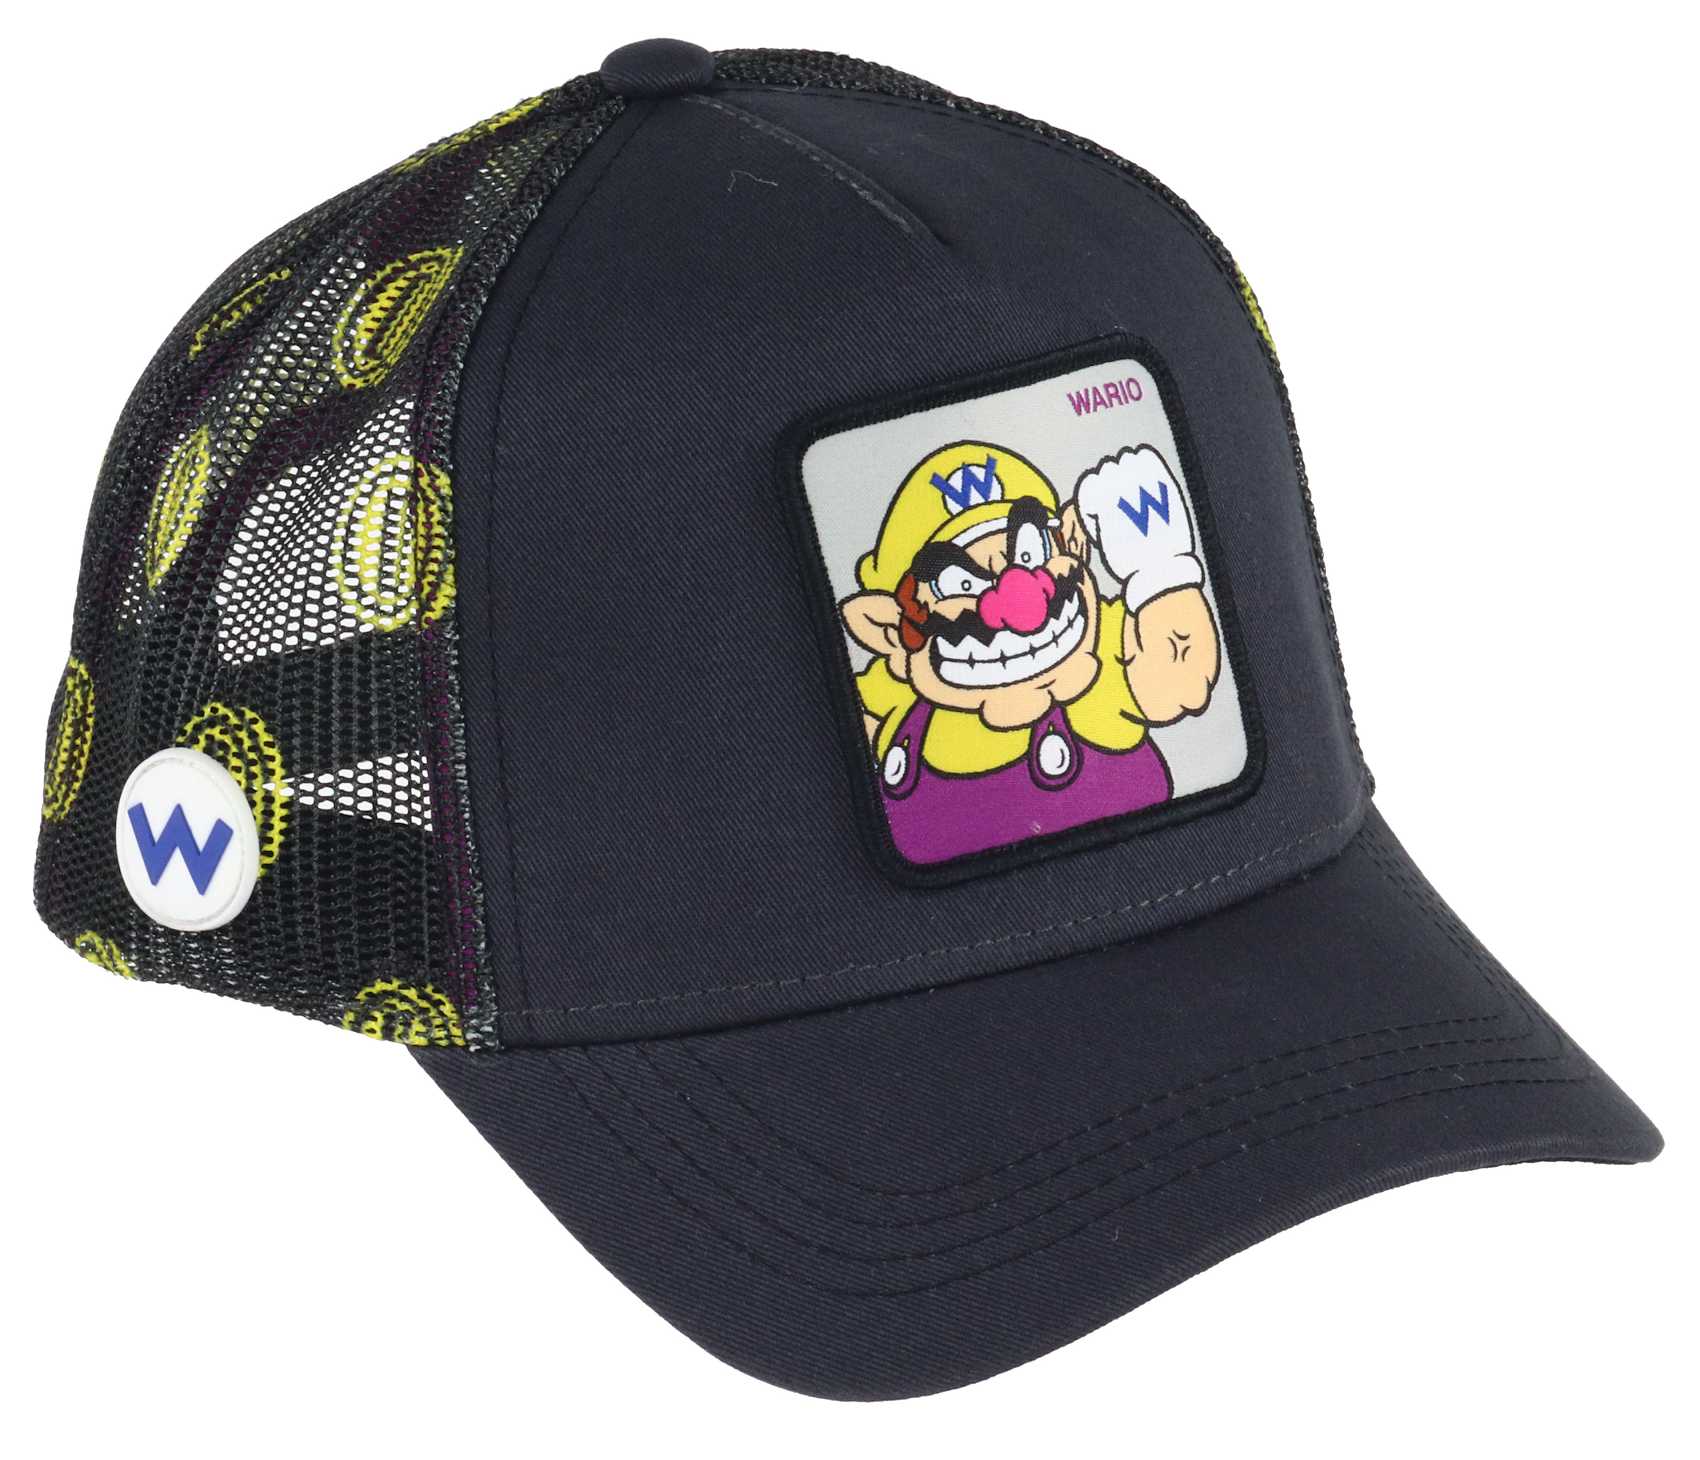 Wario Super Mario Trucker Cap Capslab